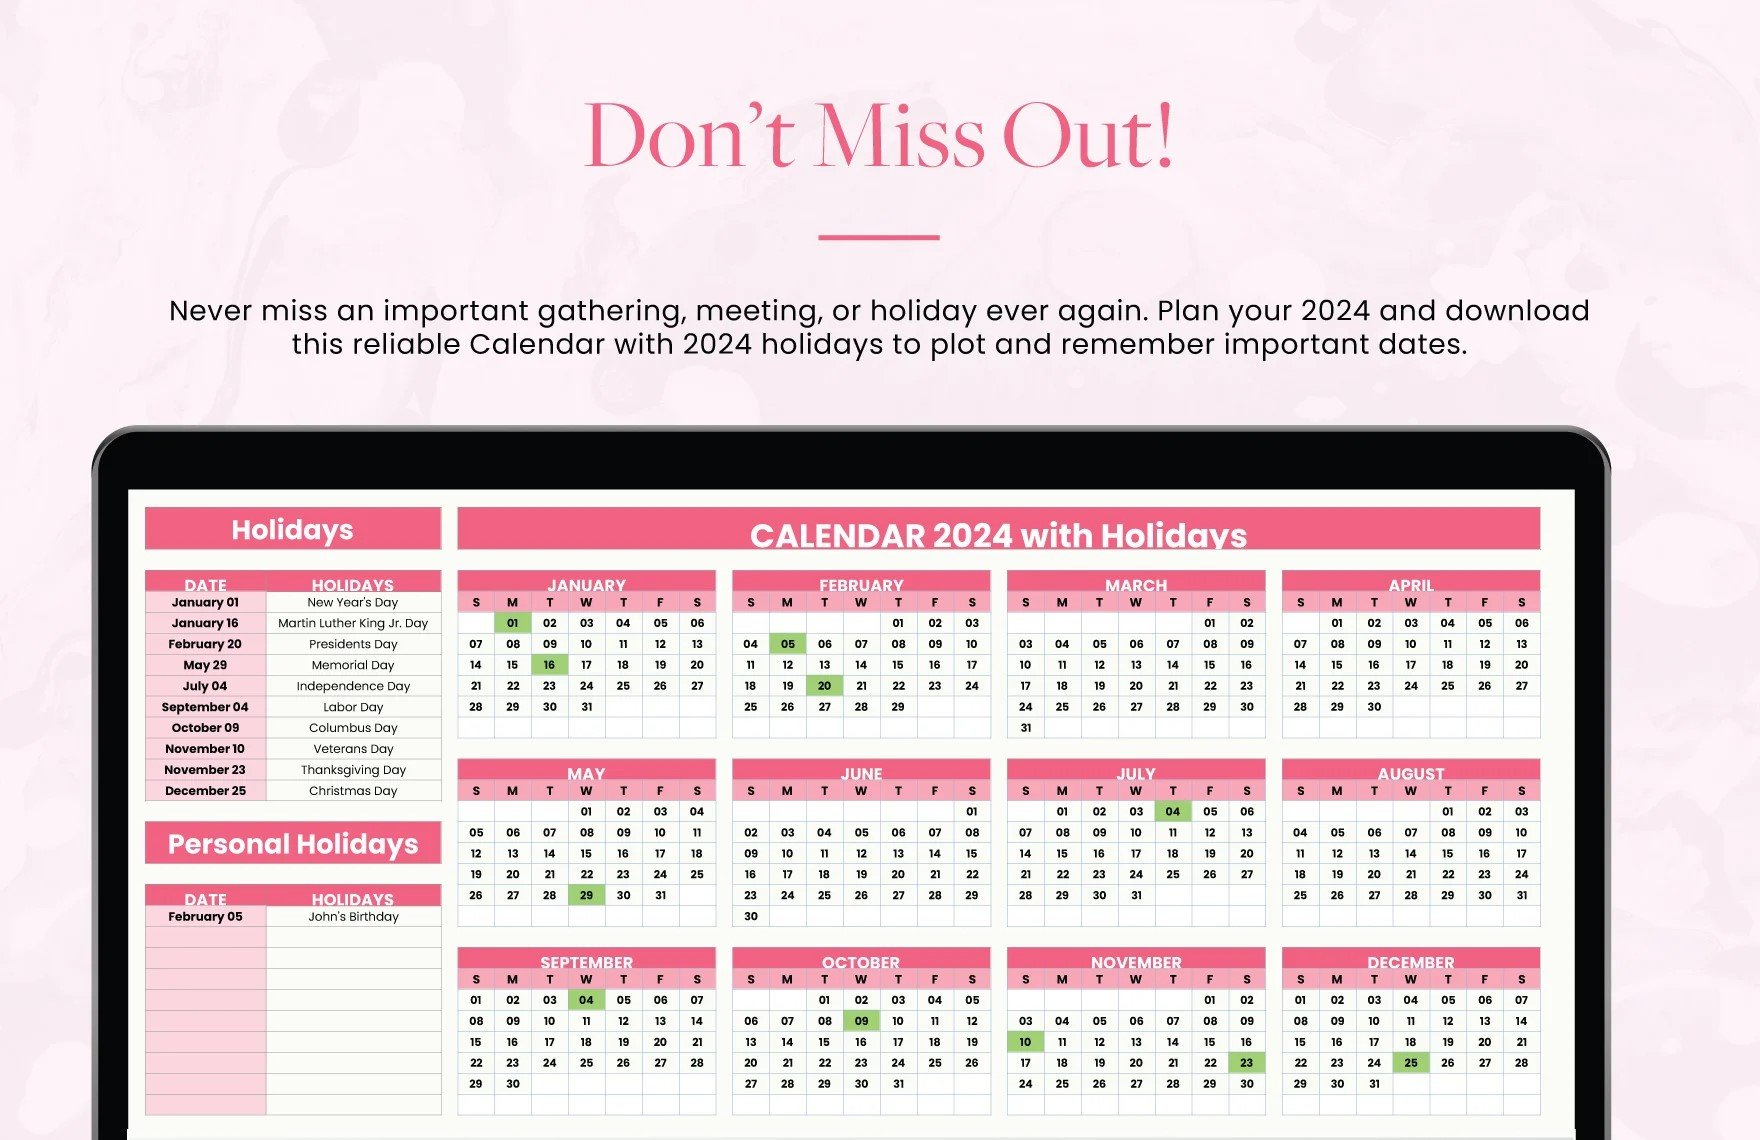 Calendar 2024 with Holidays Template